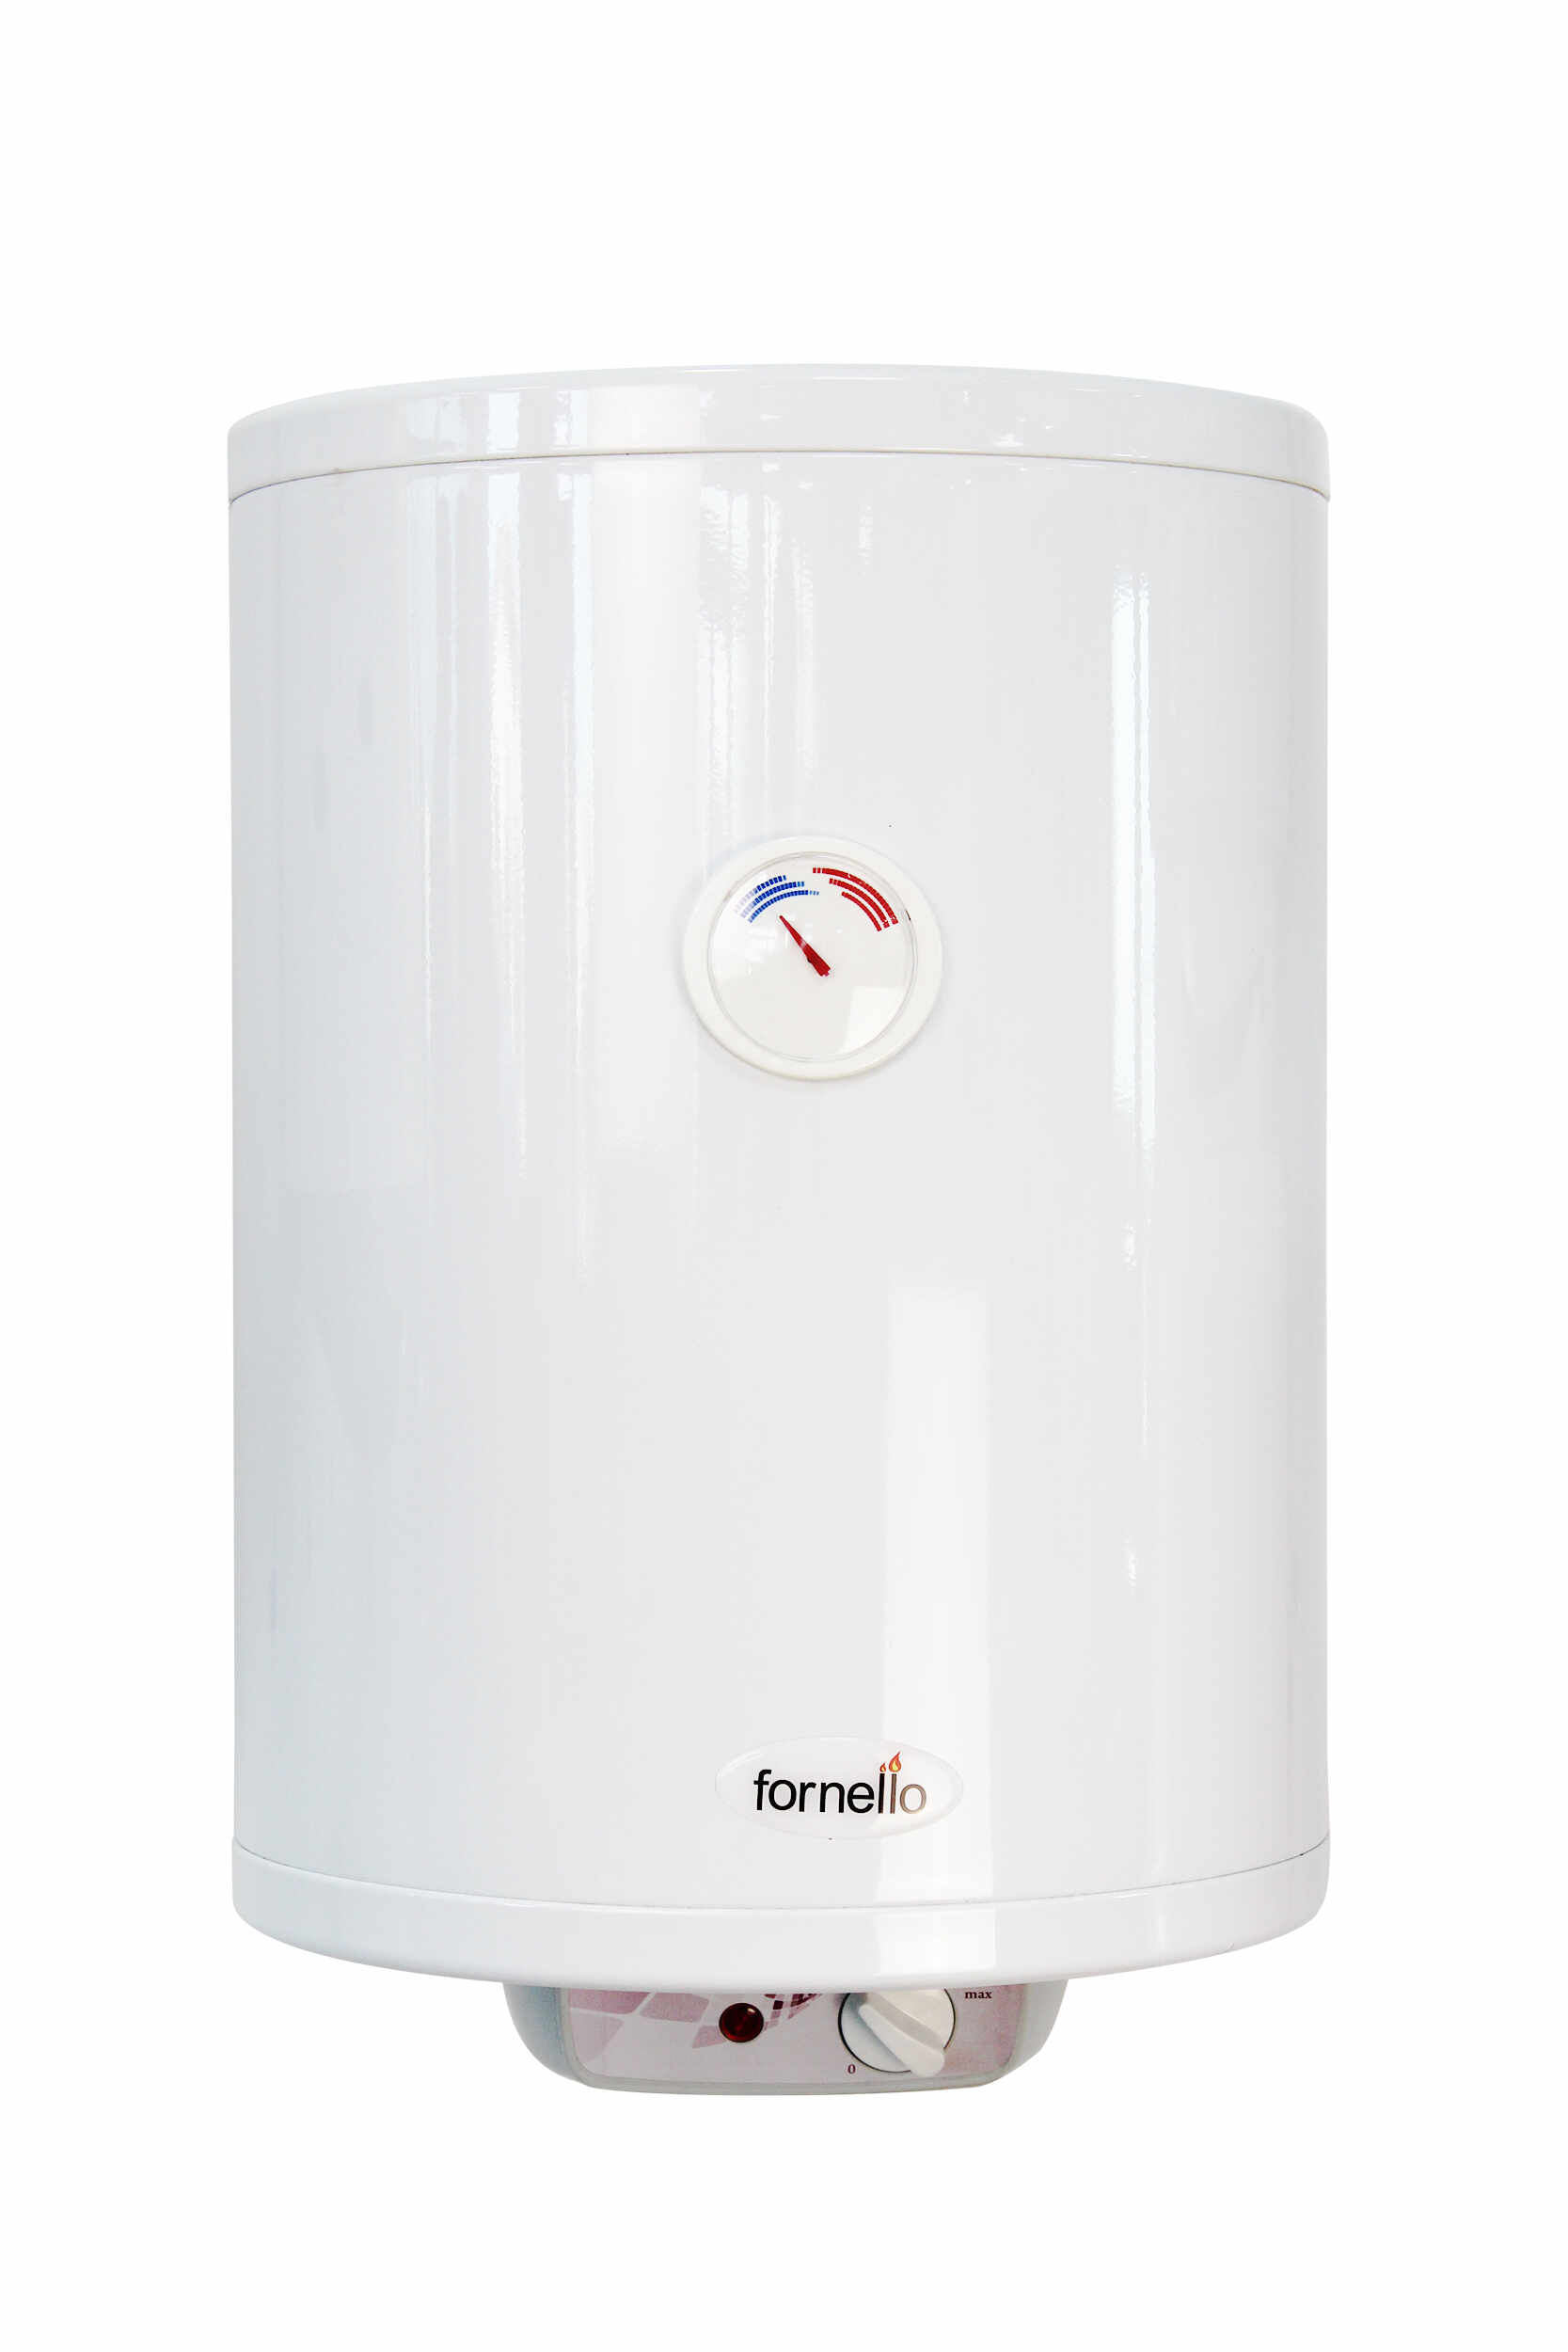 Boiler electric Fornello Titanium Plus SLIM 30 litri, 1500 watt, reglaj extern al temperaturii, emailat cu titan, diametru 360 mm, cablu, stecher si supapa de siguranta